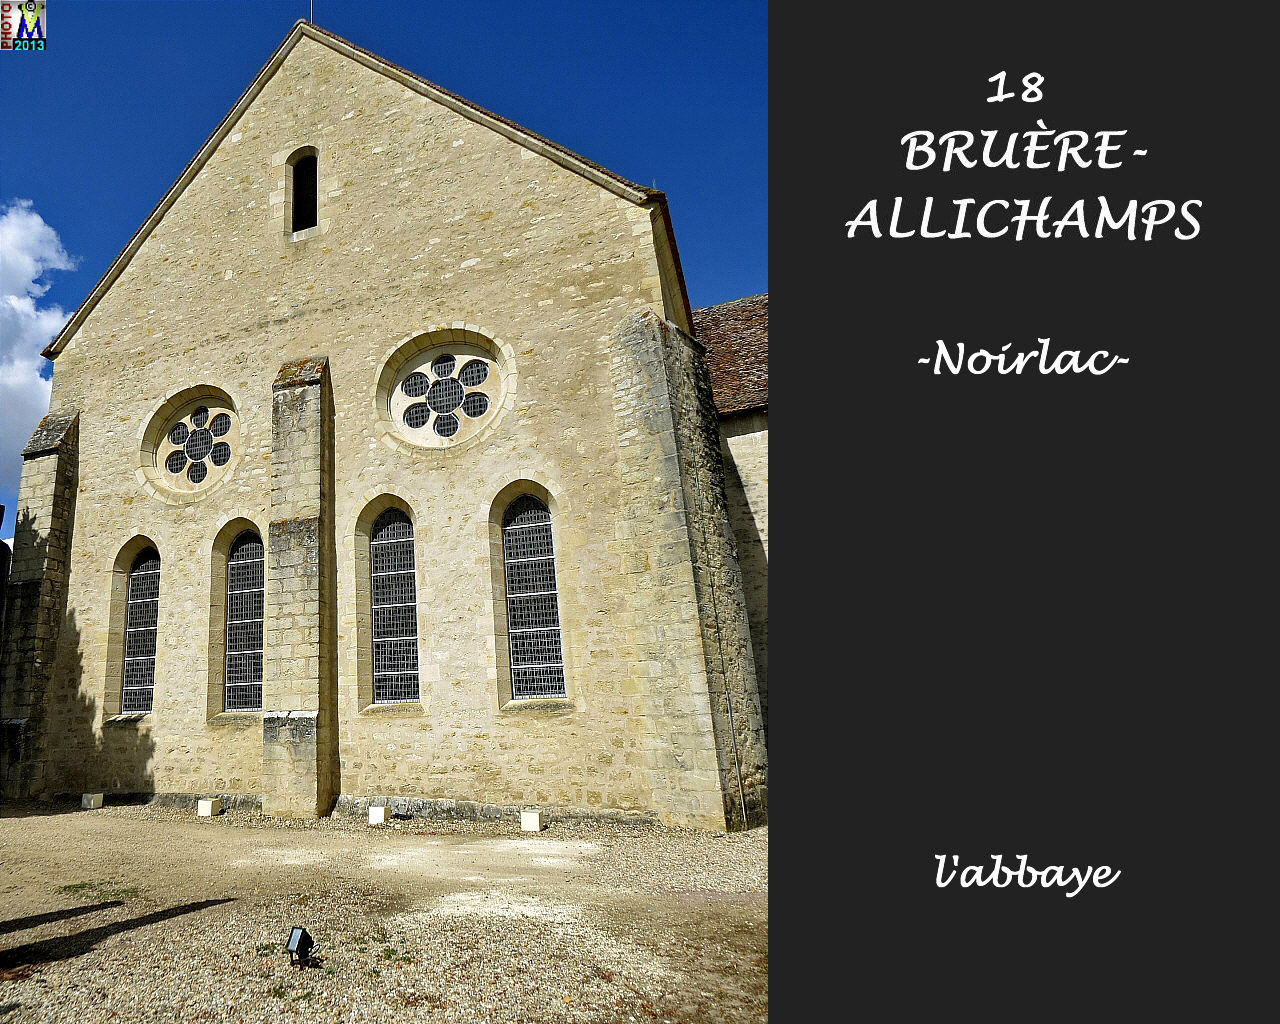 18BRUERE-ALLICHAMPSzNOIRLAC_abbaye_124.jpg